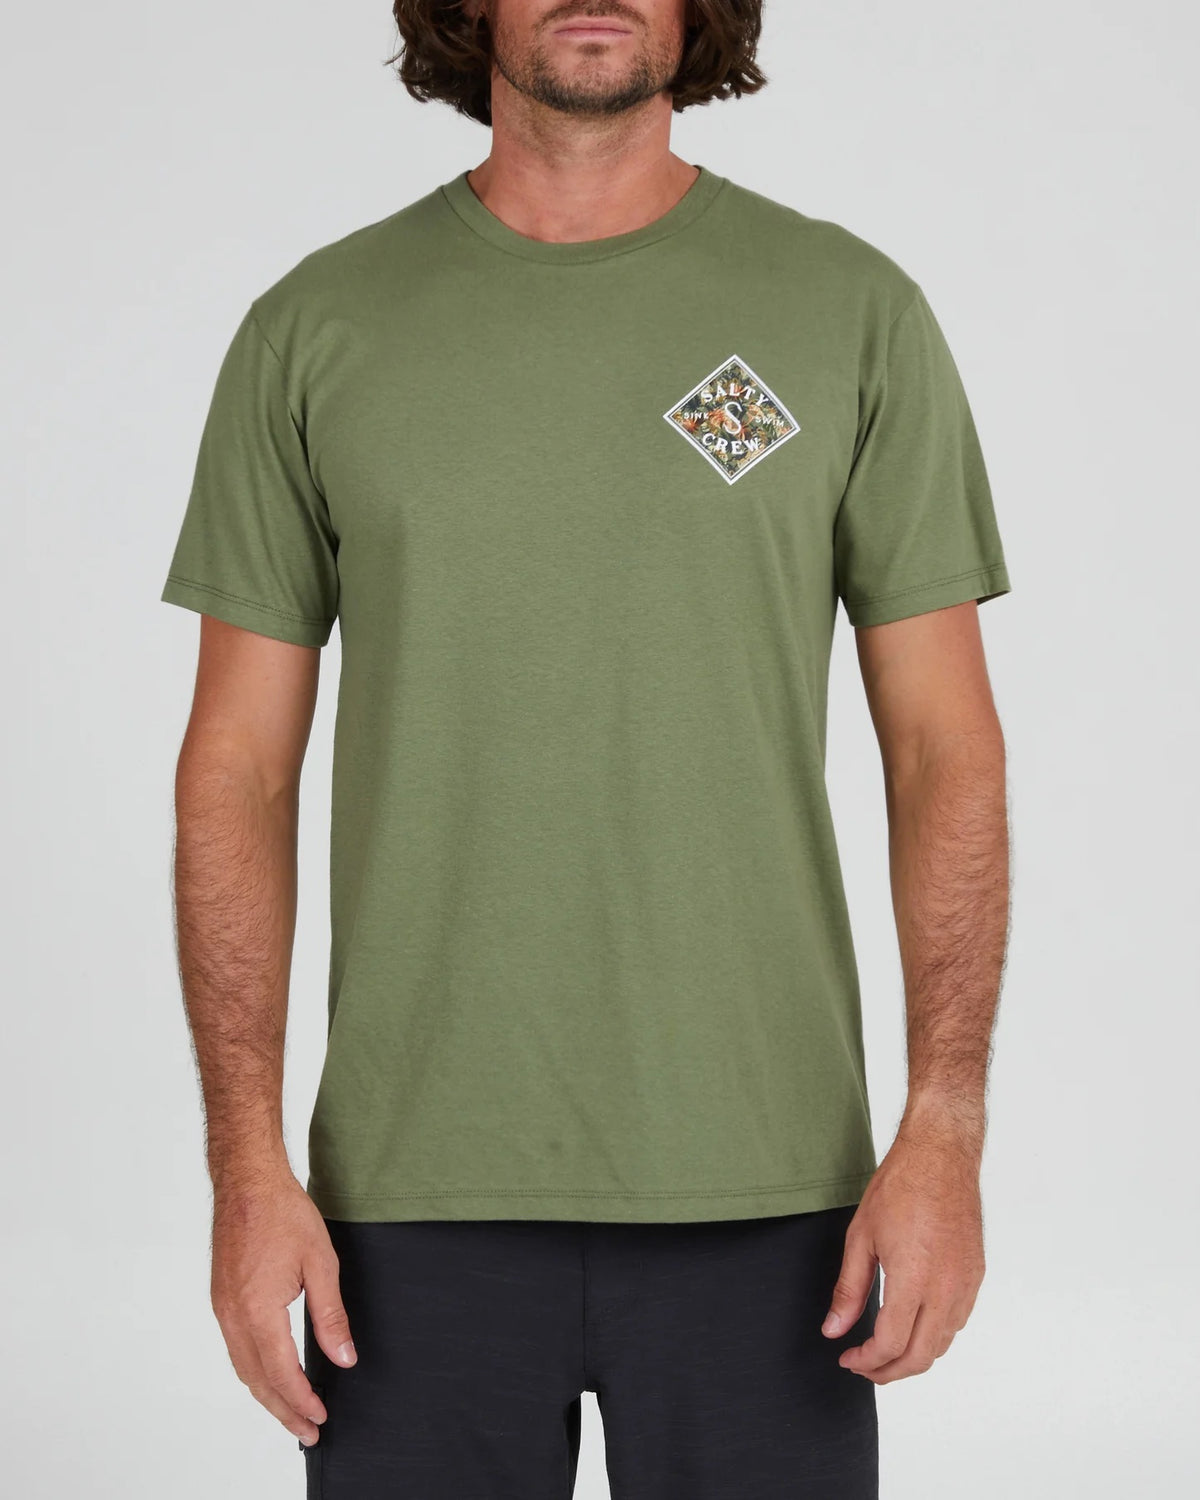 Tippet Shores Premium T-Shirt